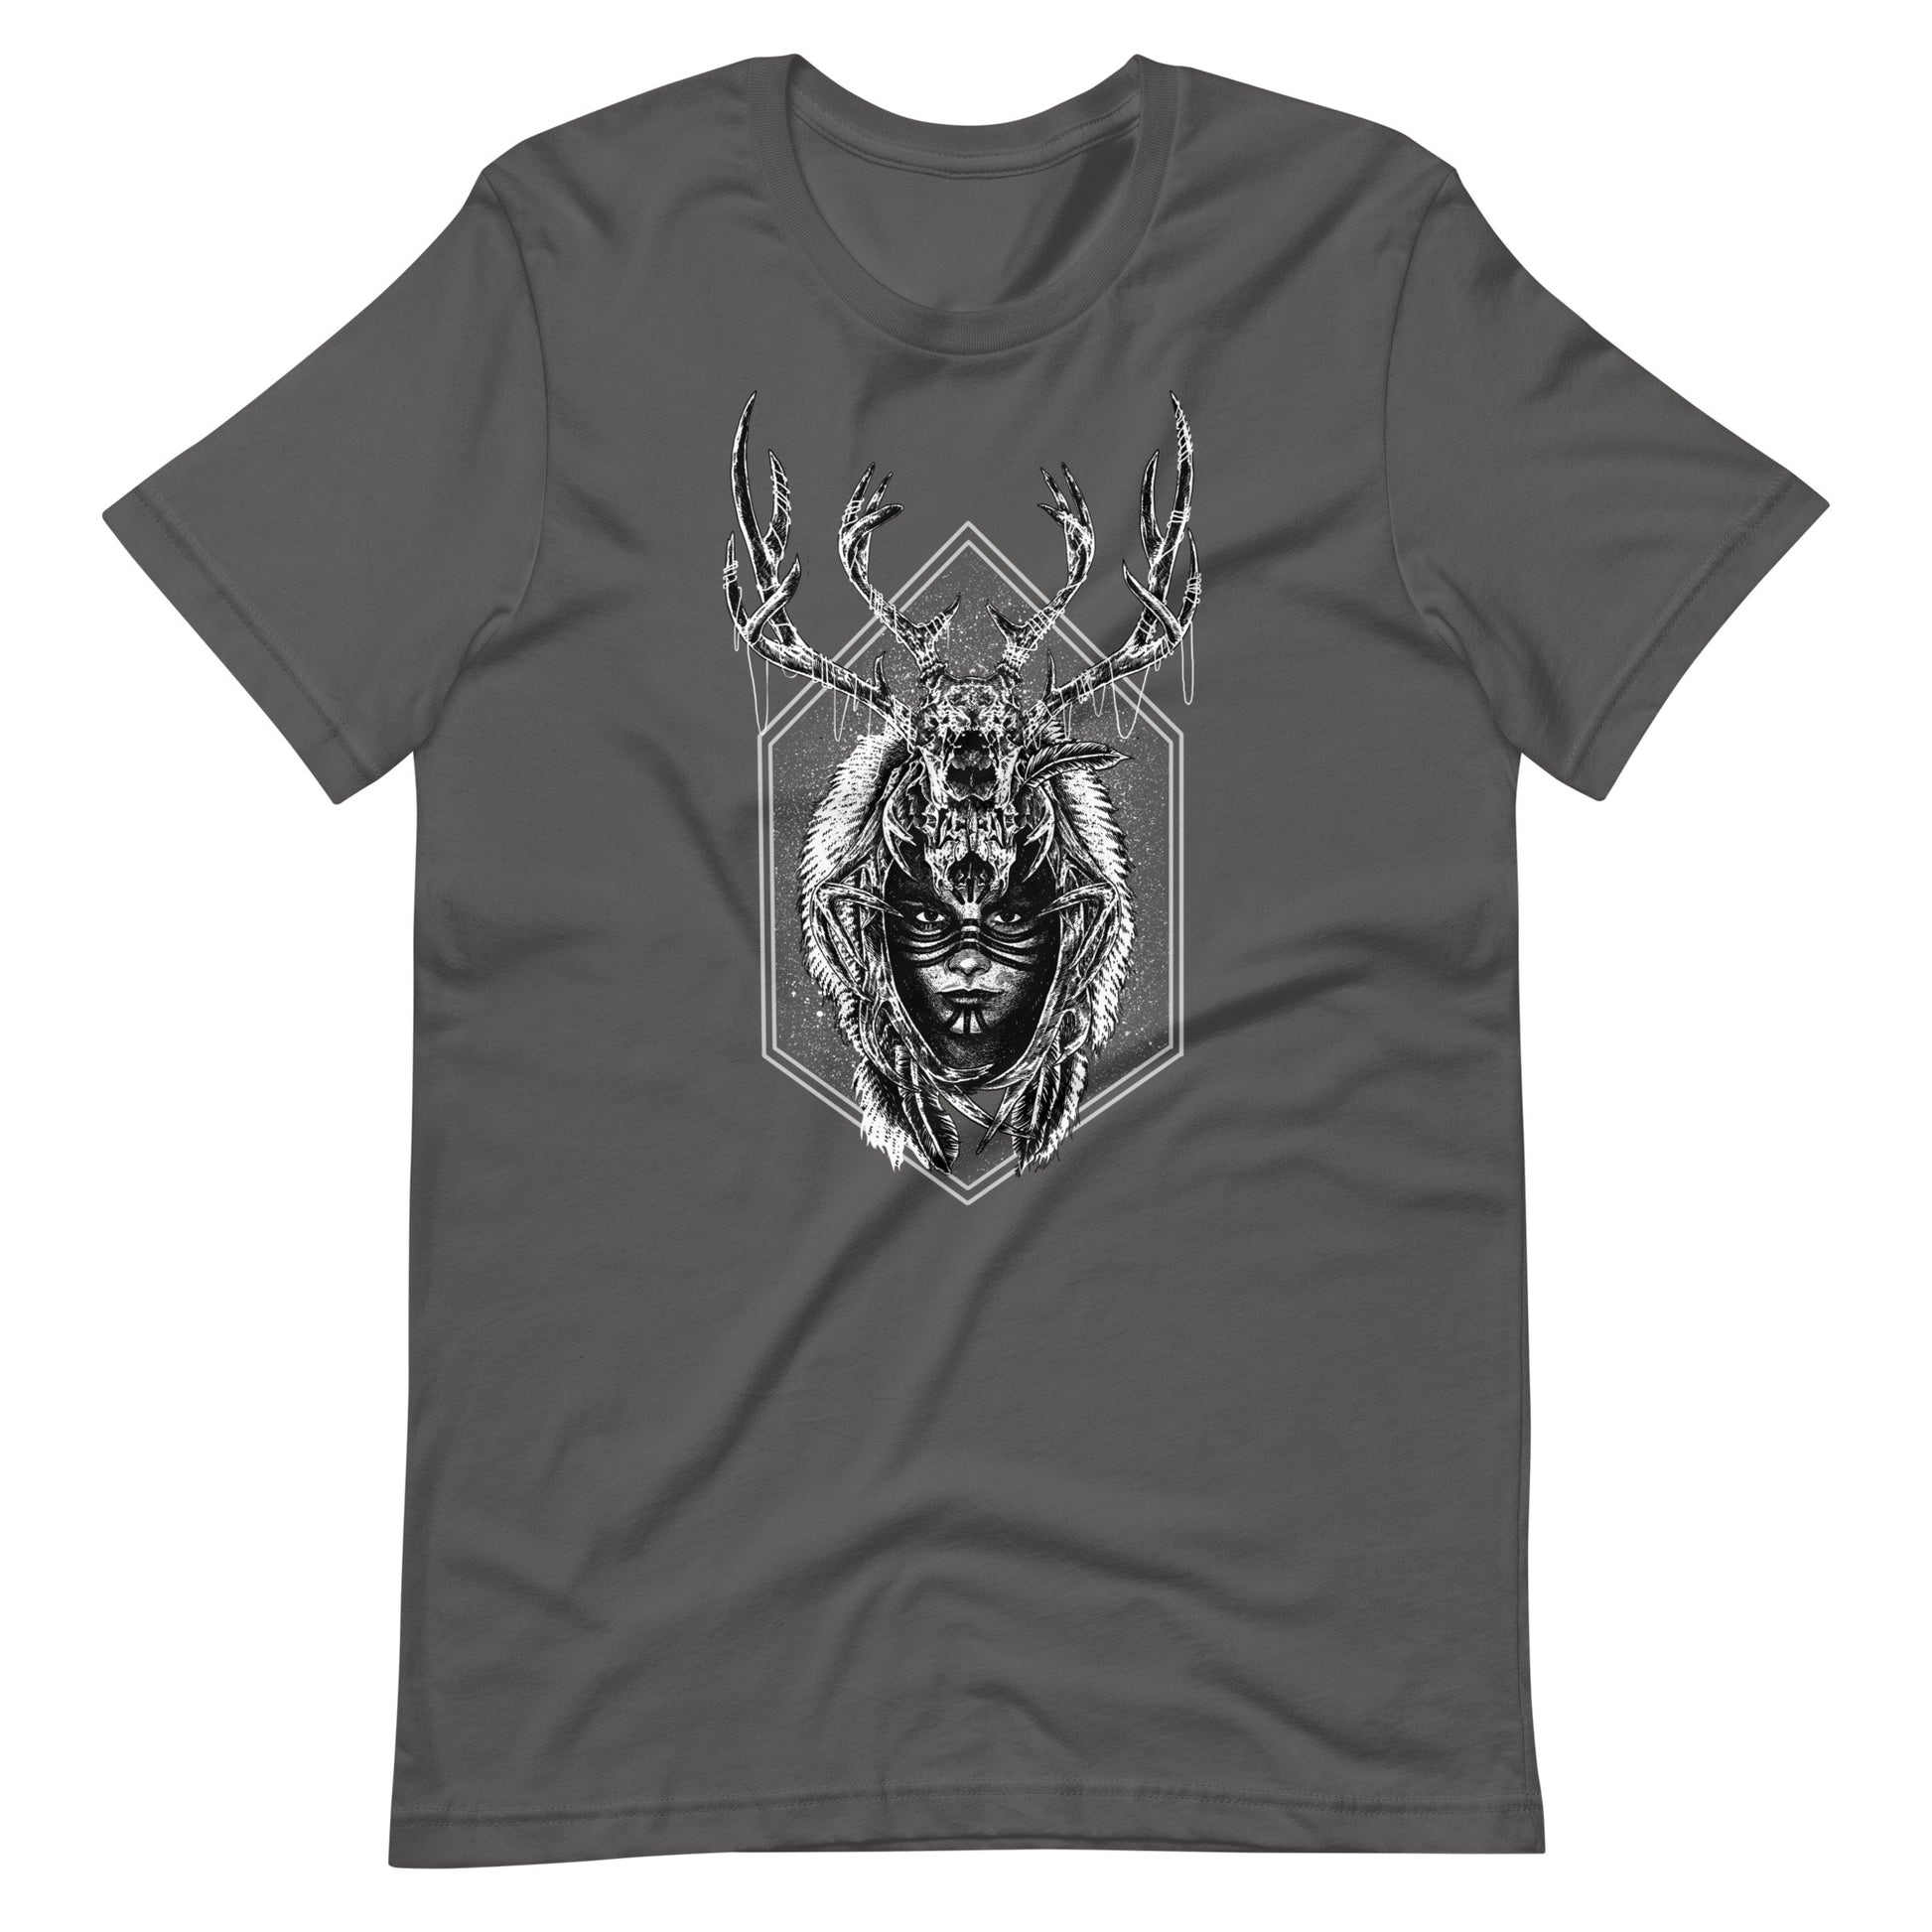 The Ruler - Men's t-shirt - Asphalt Front